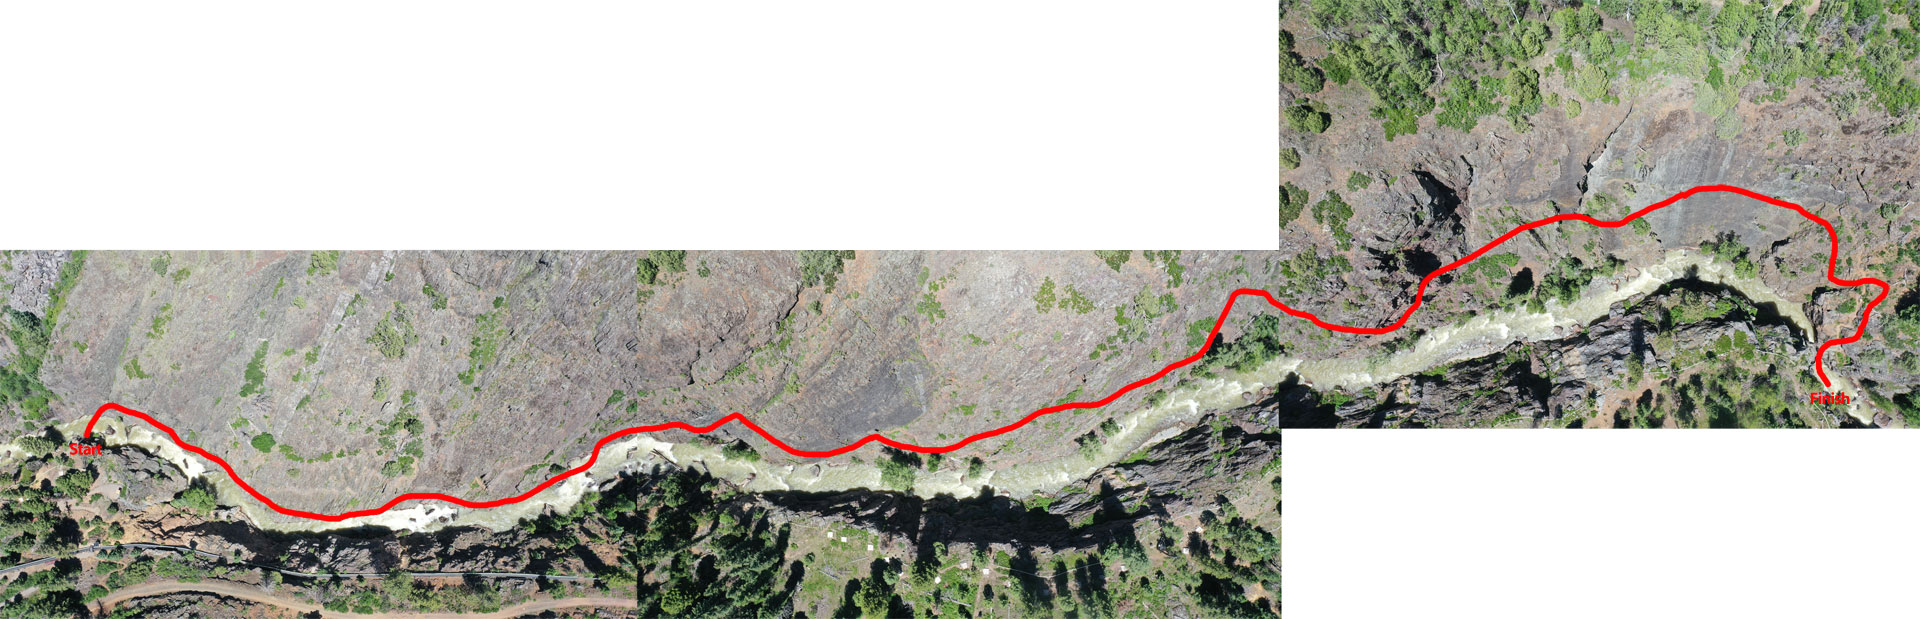 Ouray Via Ferrata Upstream Route